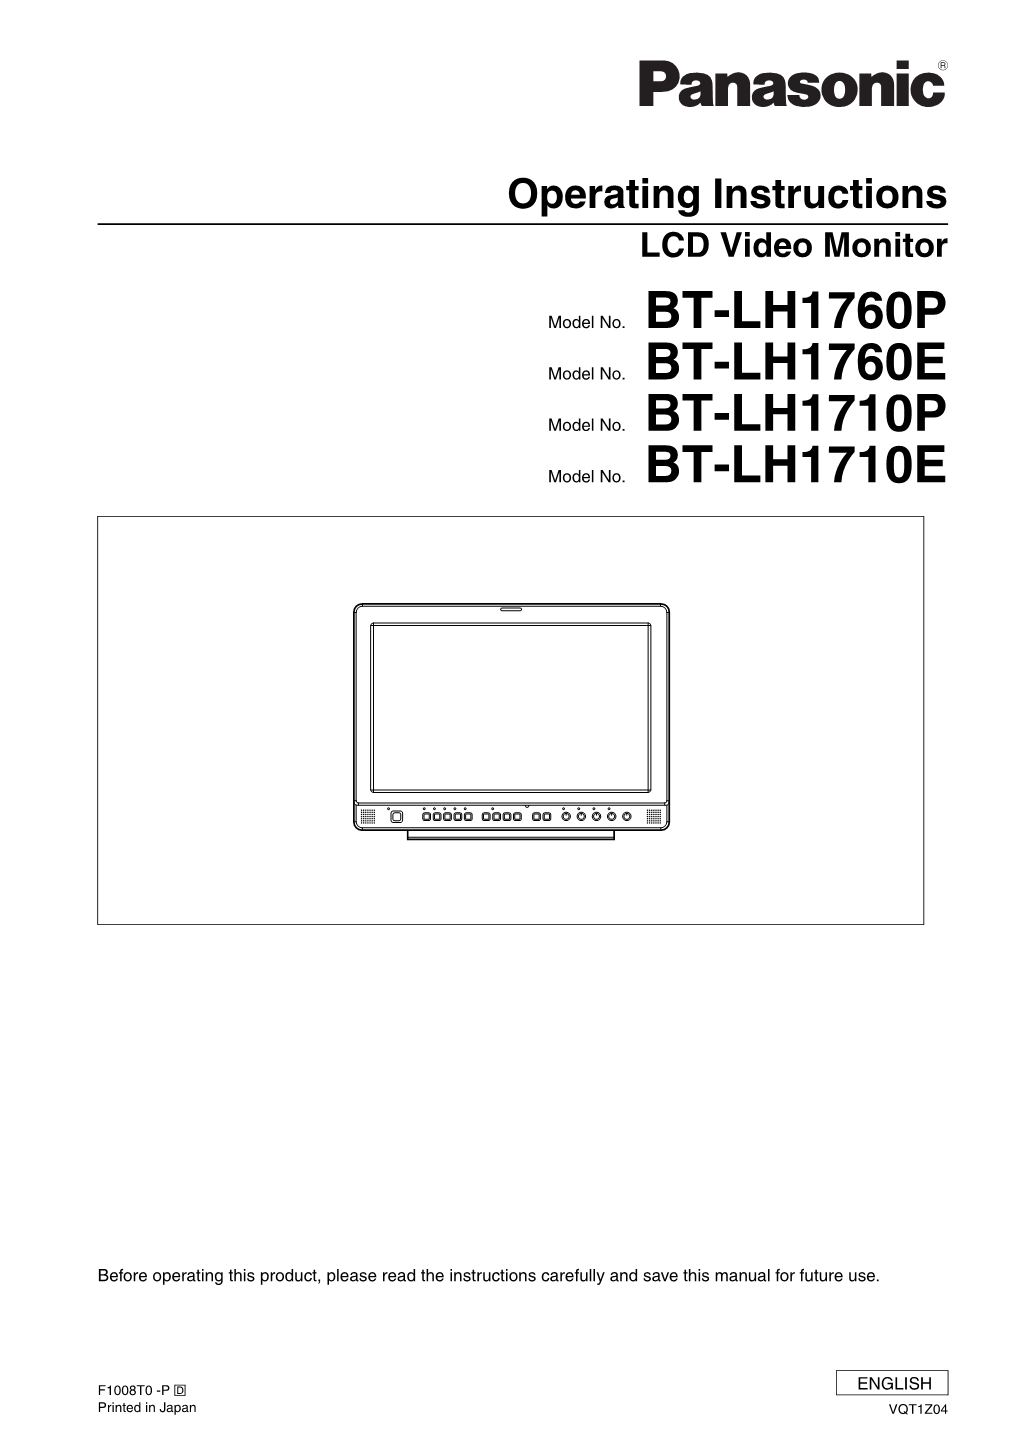 Panasonic BT-LH1710 Operating Instructions